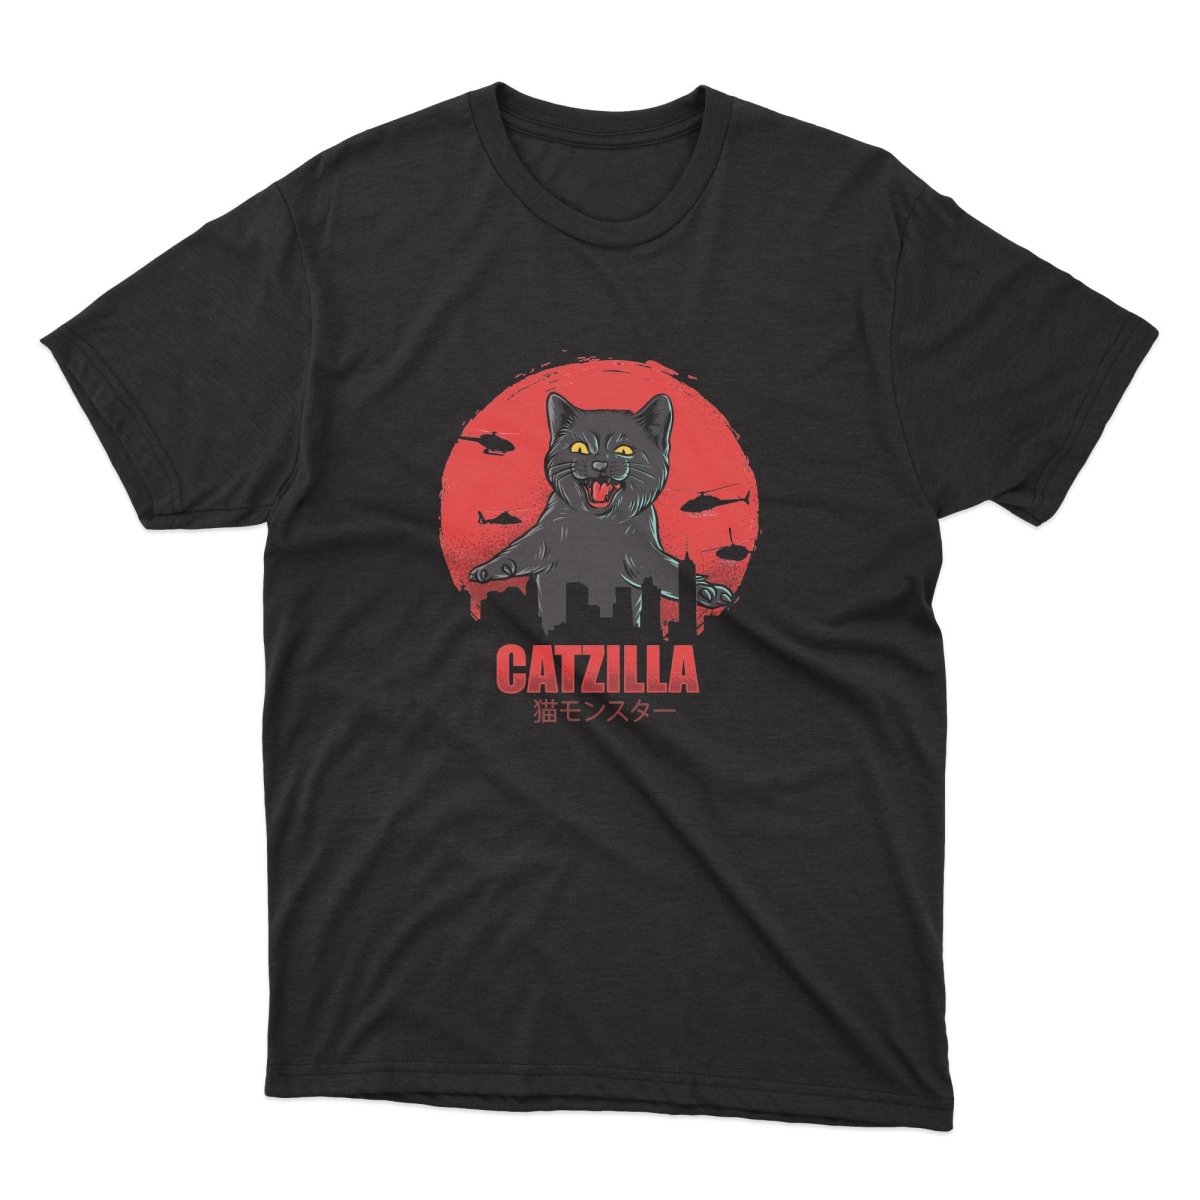 Catzilla Shirt - stickerbullCatzilla ShirtShirtsPrintifystickerbull24040495794378175792BlackSa black t - shirt with an image of a cat on it